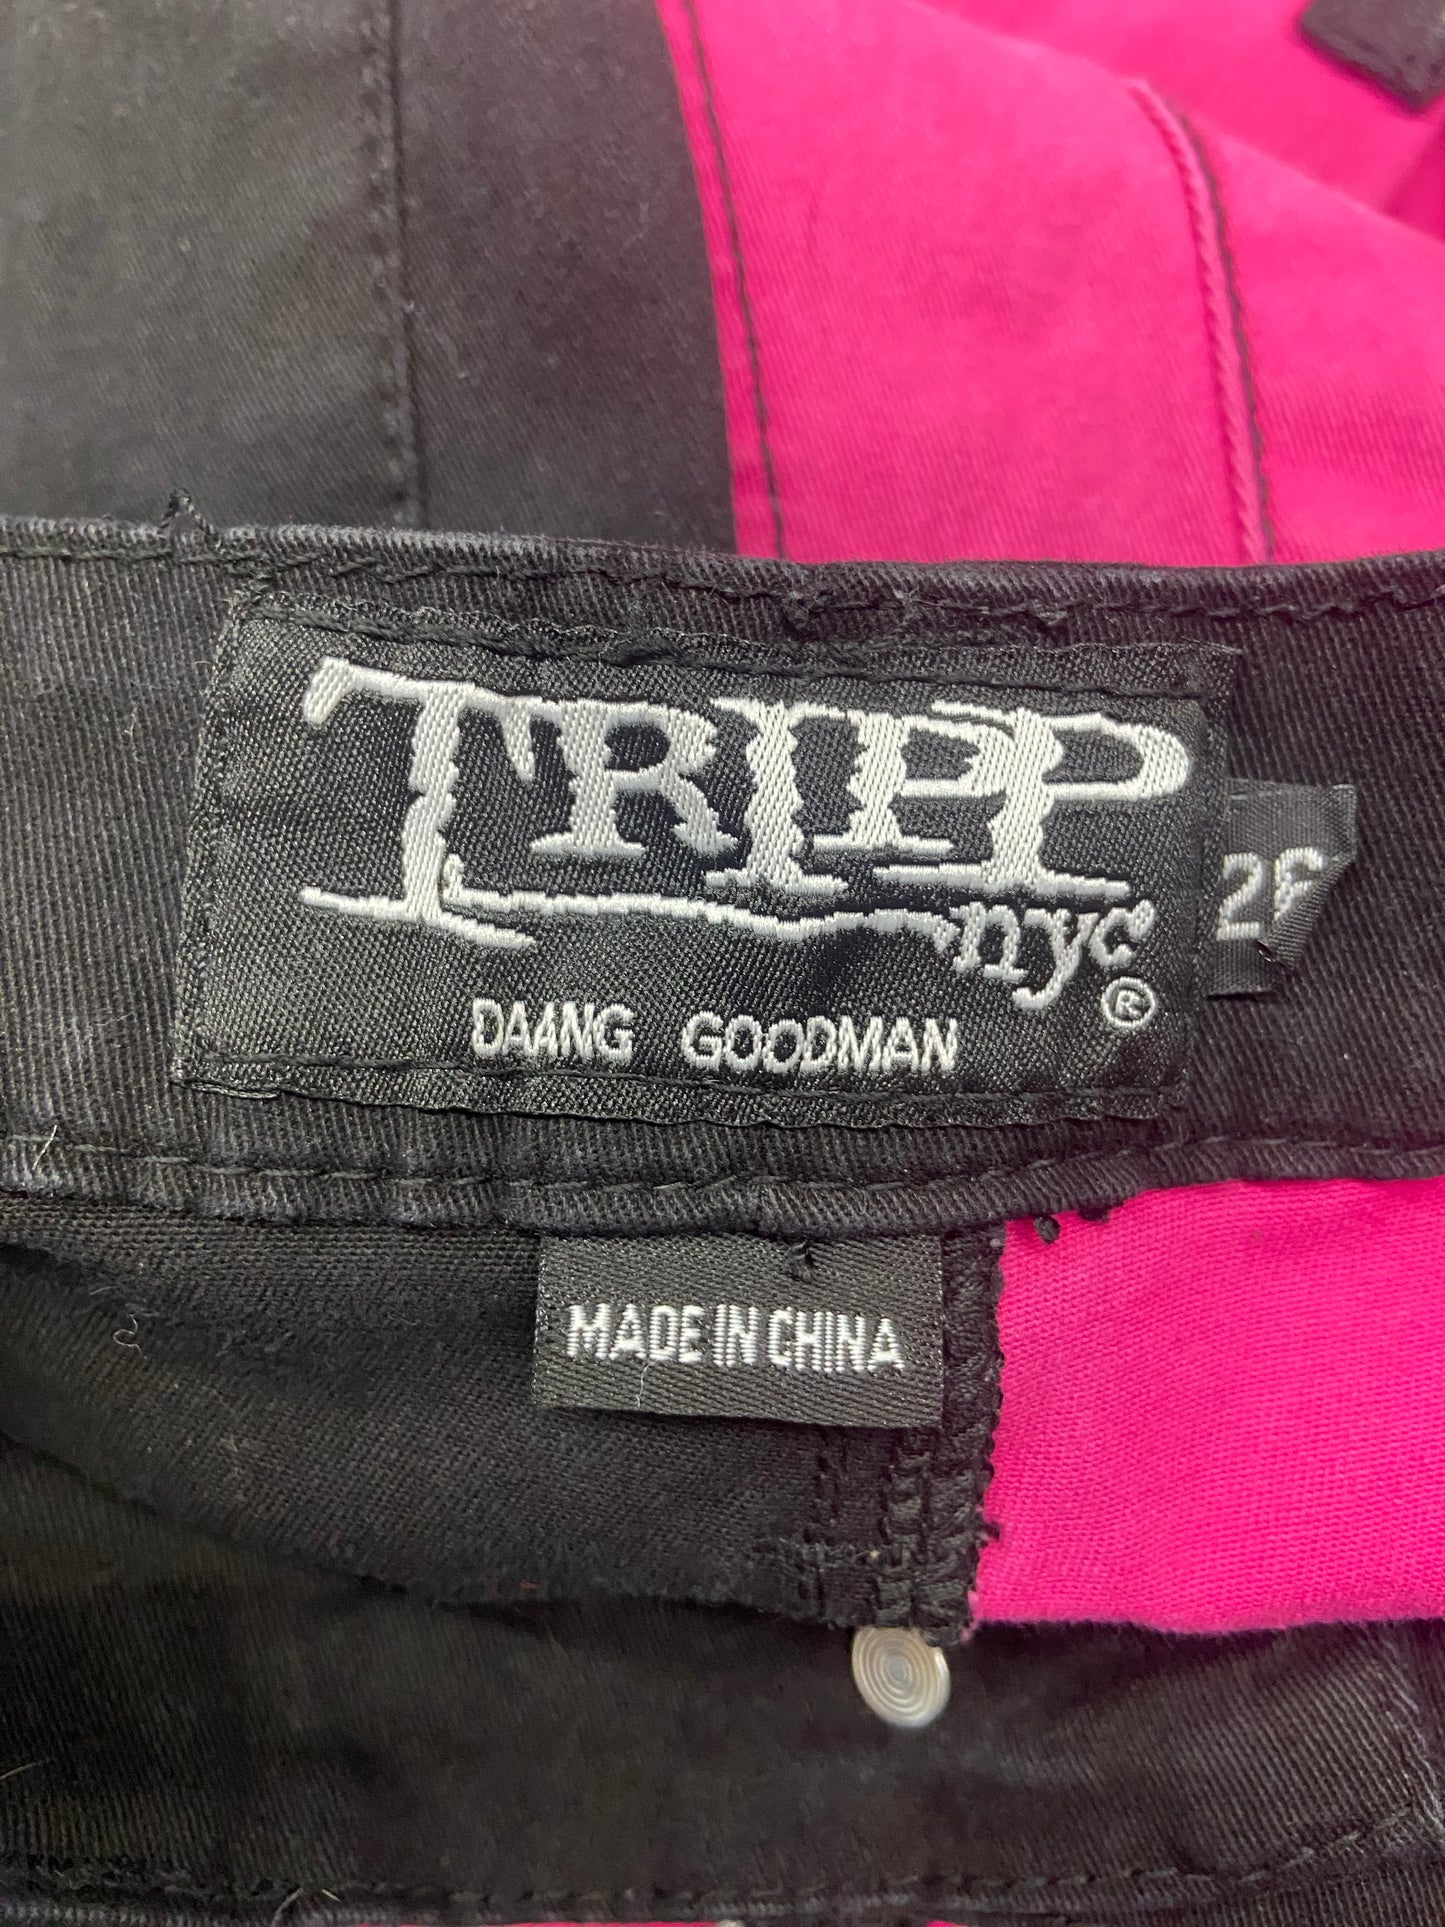 VTG Tripp NYC by Daang Goodman Rave Zipper Pants Sz 26x32